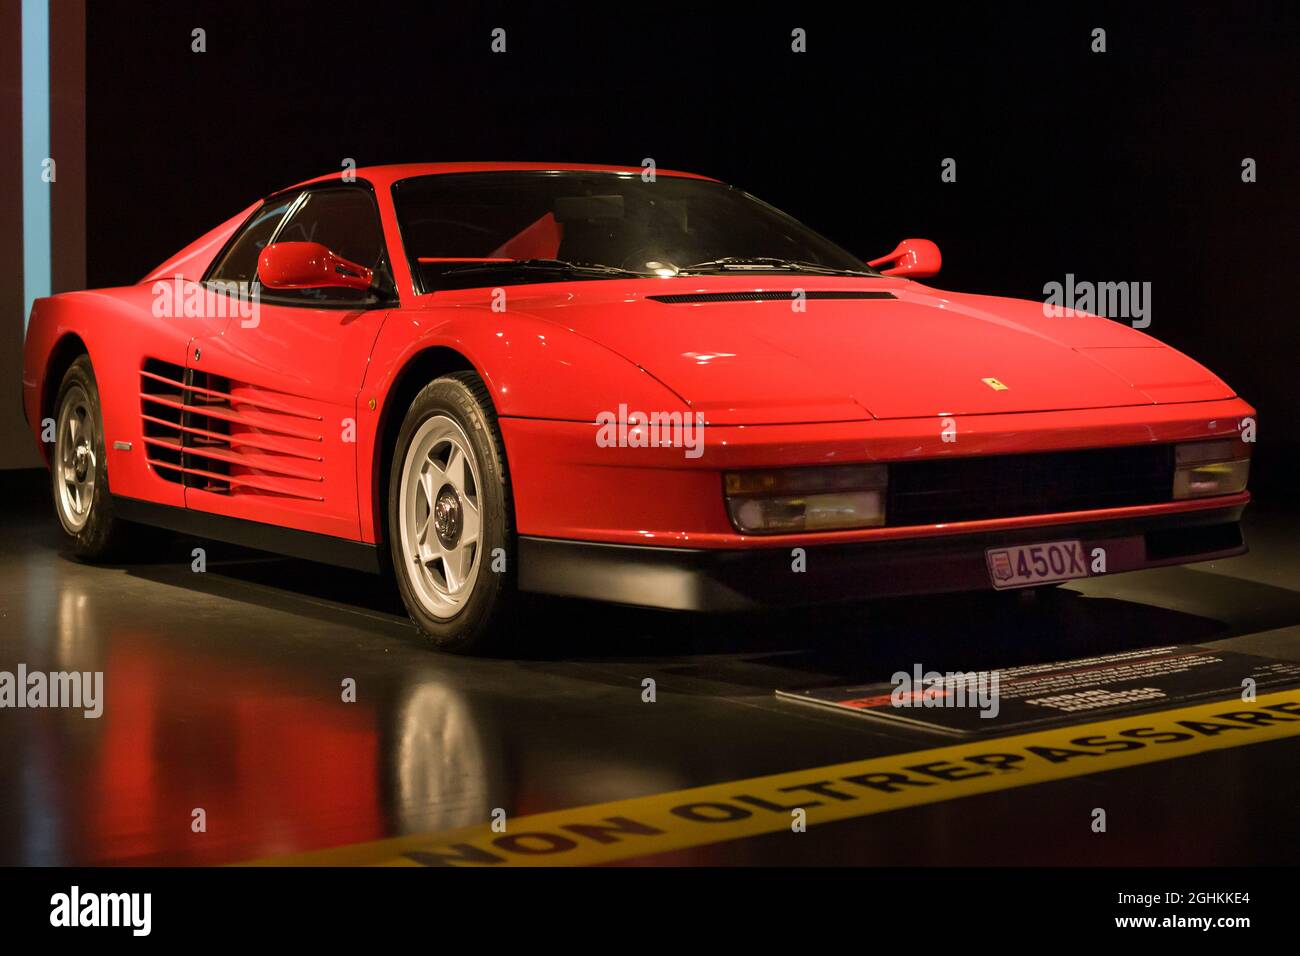 Torino, Italy - August 13, 2021: Ferrari Testarossa showcased at the National Automobile Museum (MAUTO) in Torino, Italy. Stock Photo